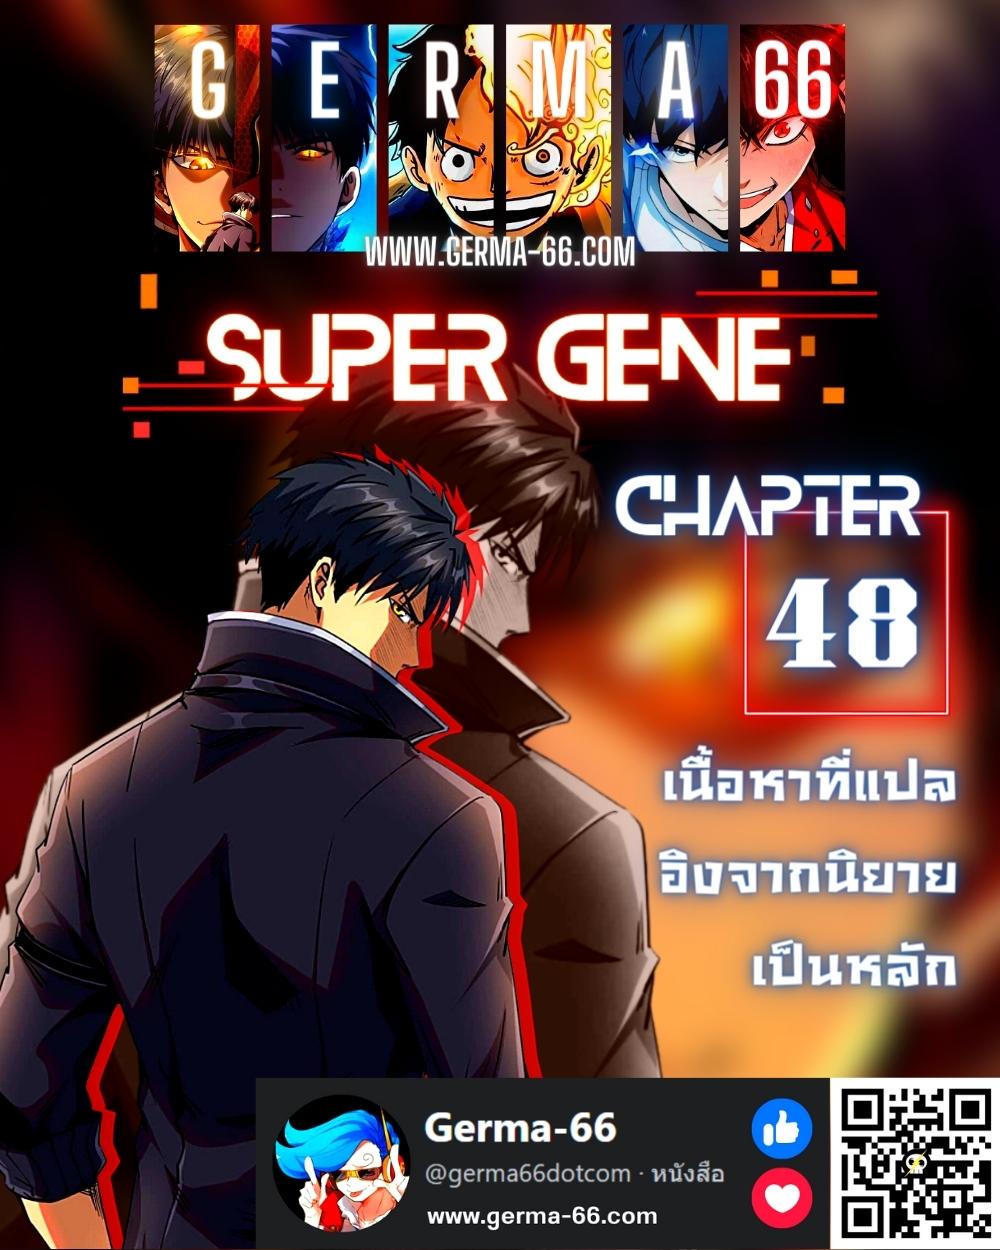 Super Gene 48 (1)